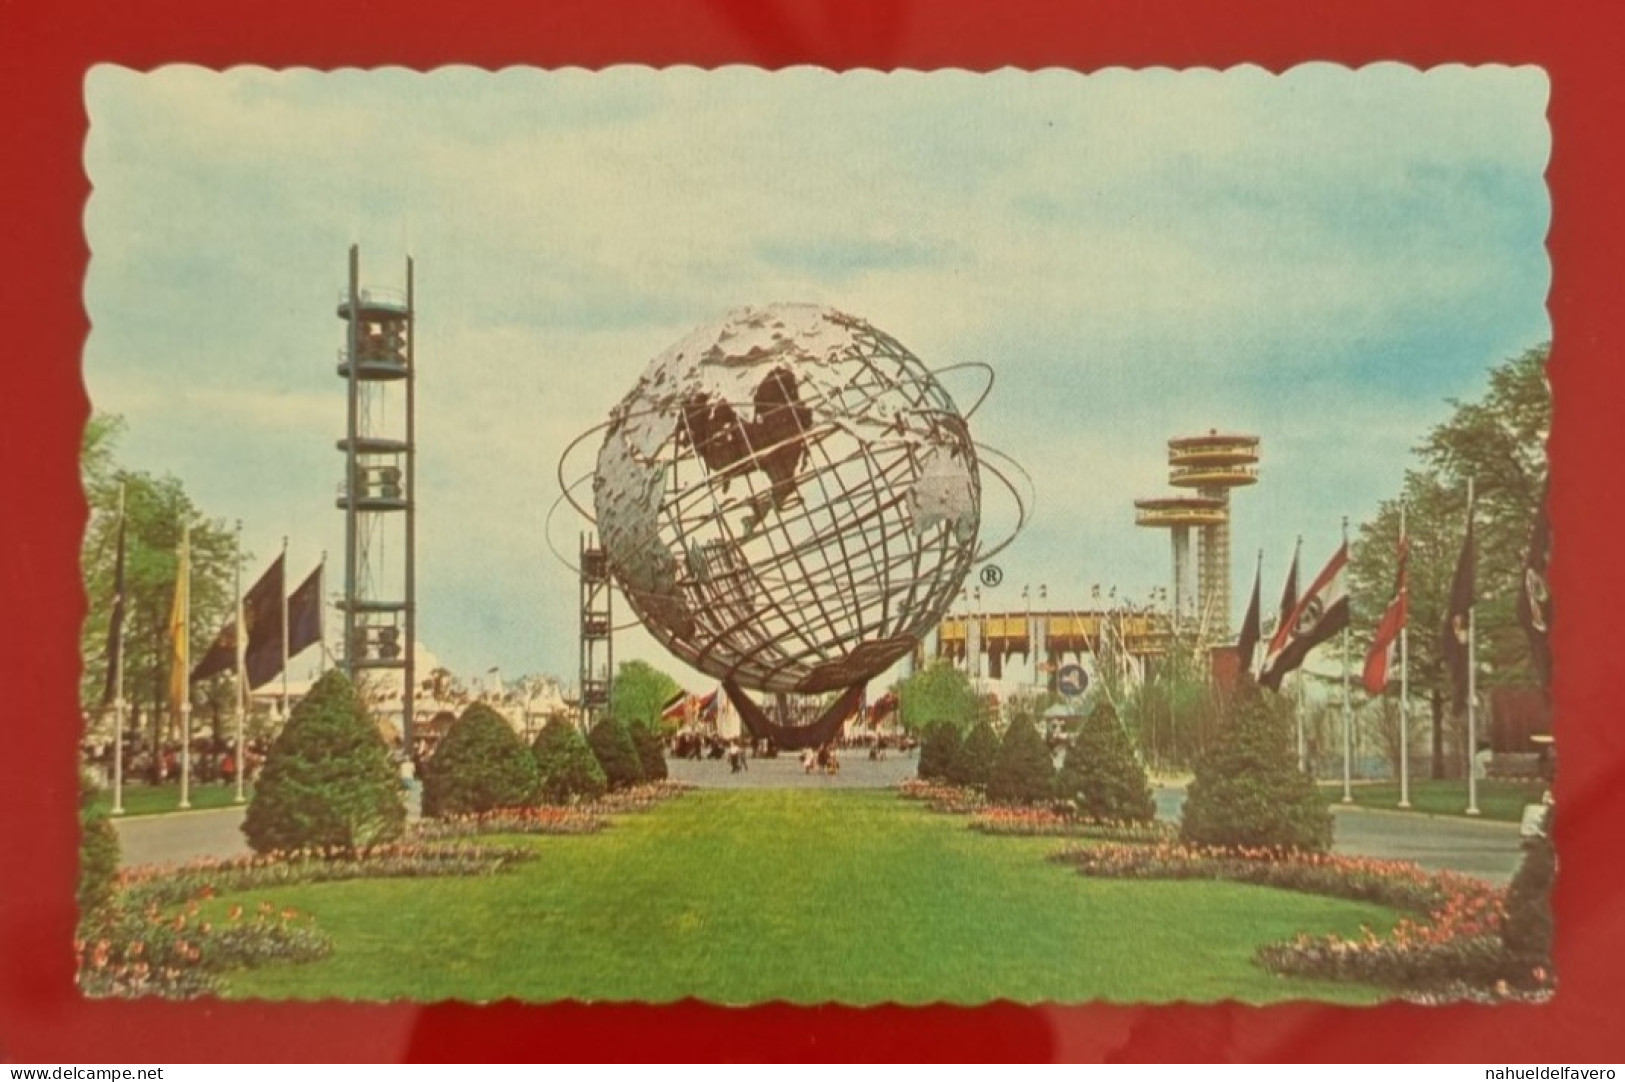 Uncirculated Postcard - USA - NY, NEW YORK WORLD'S FAIR 1964-65 - UNISPHERE - Tentoonstellingen